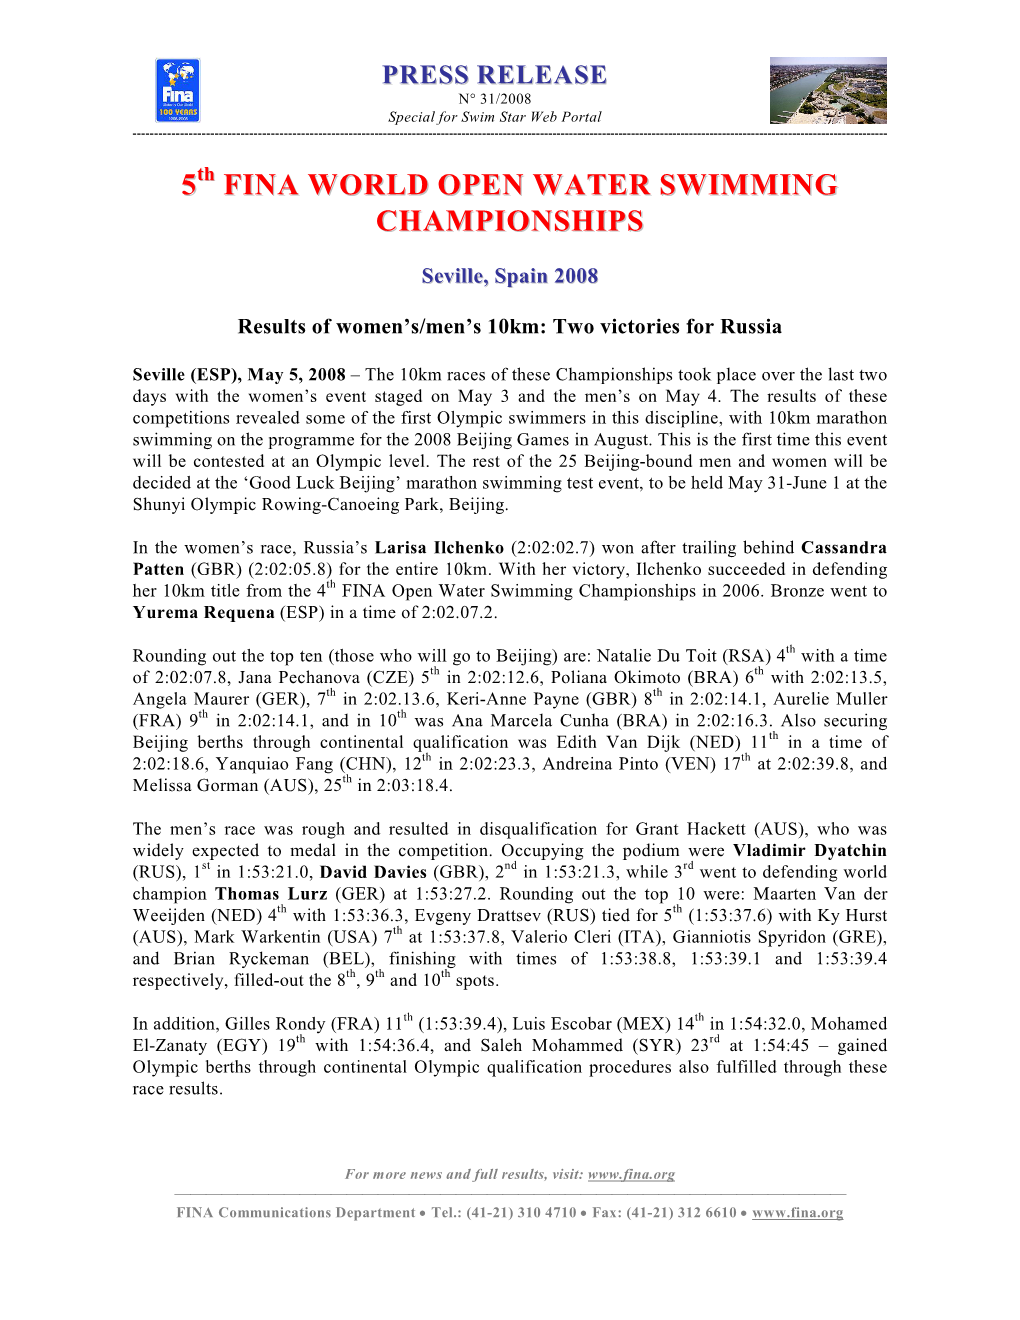 5 Fina World Open Water Swimming Championships